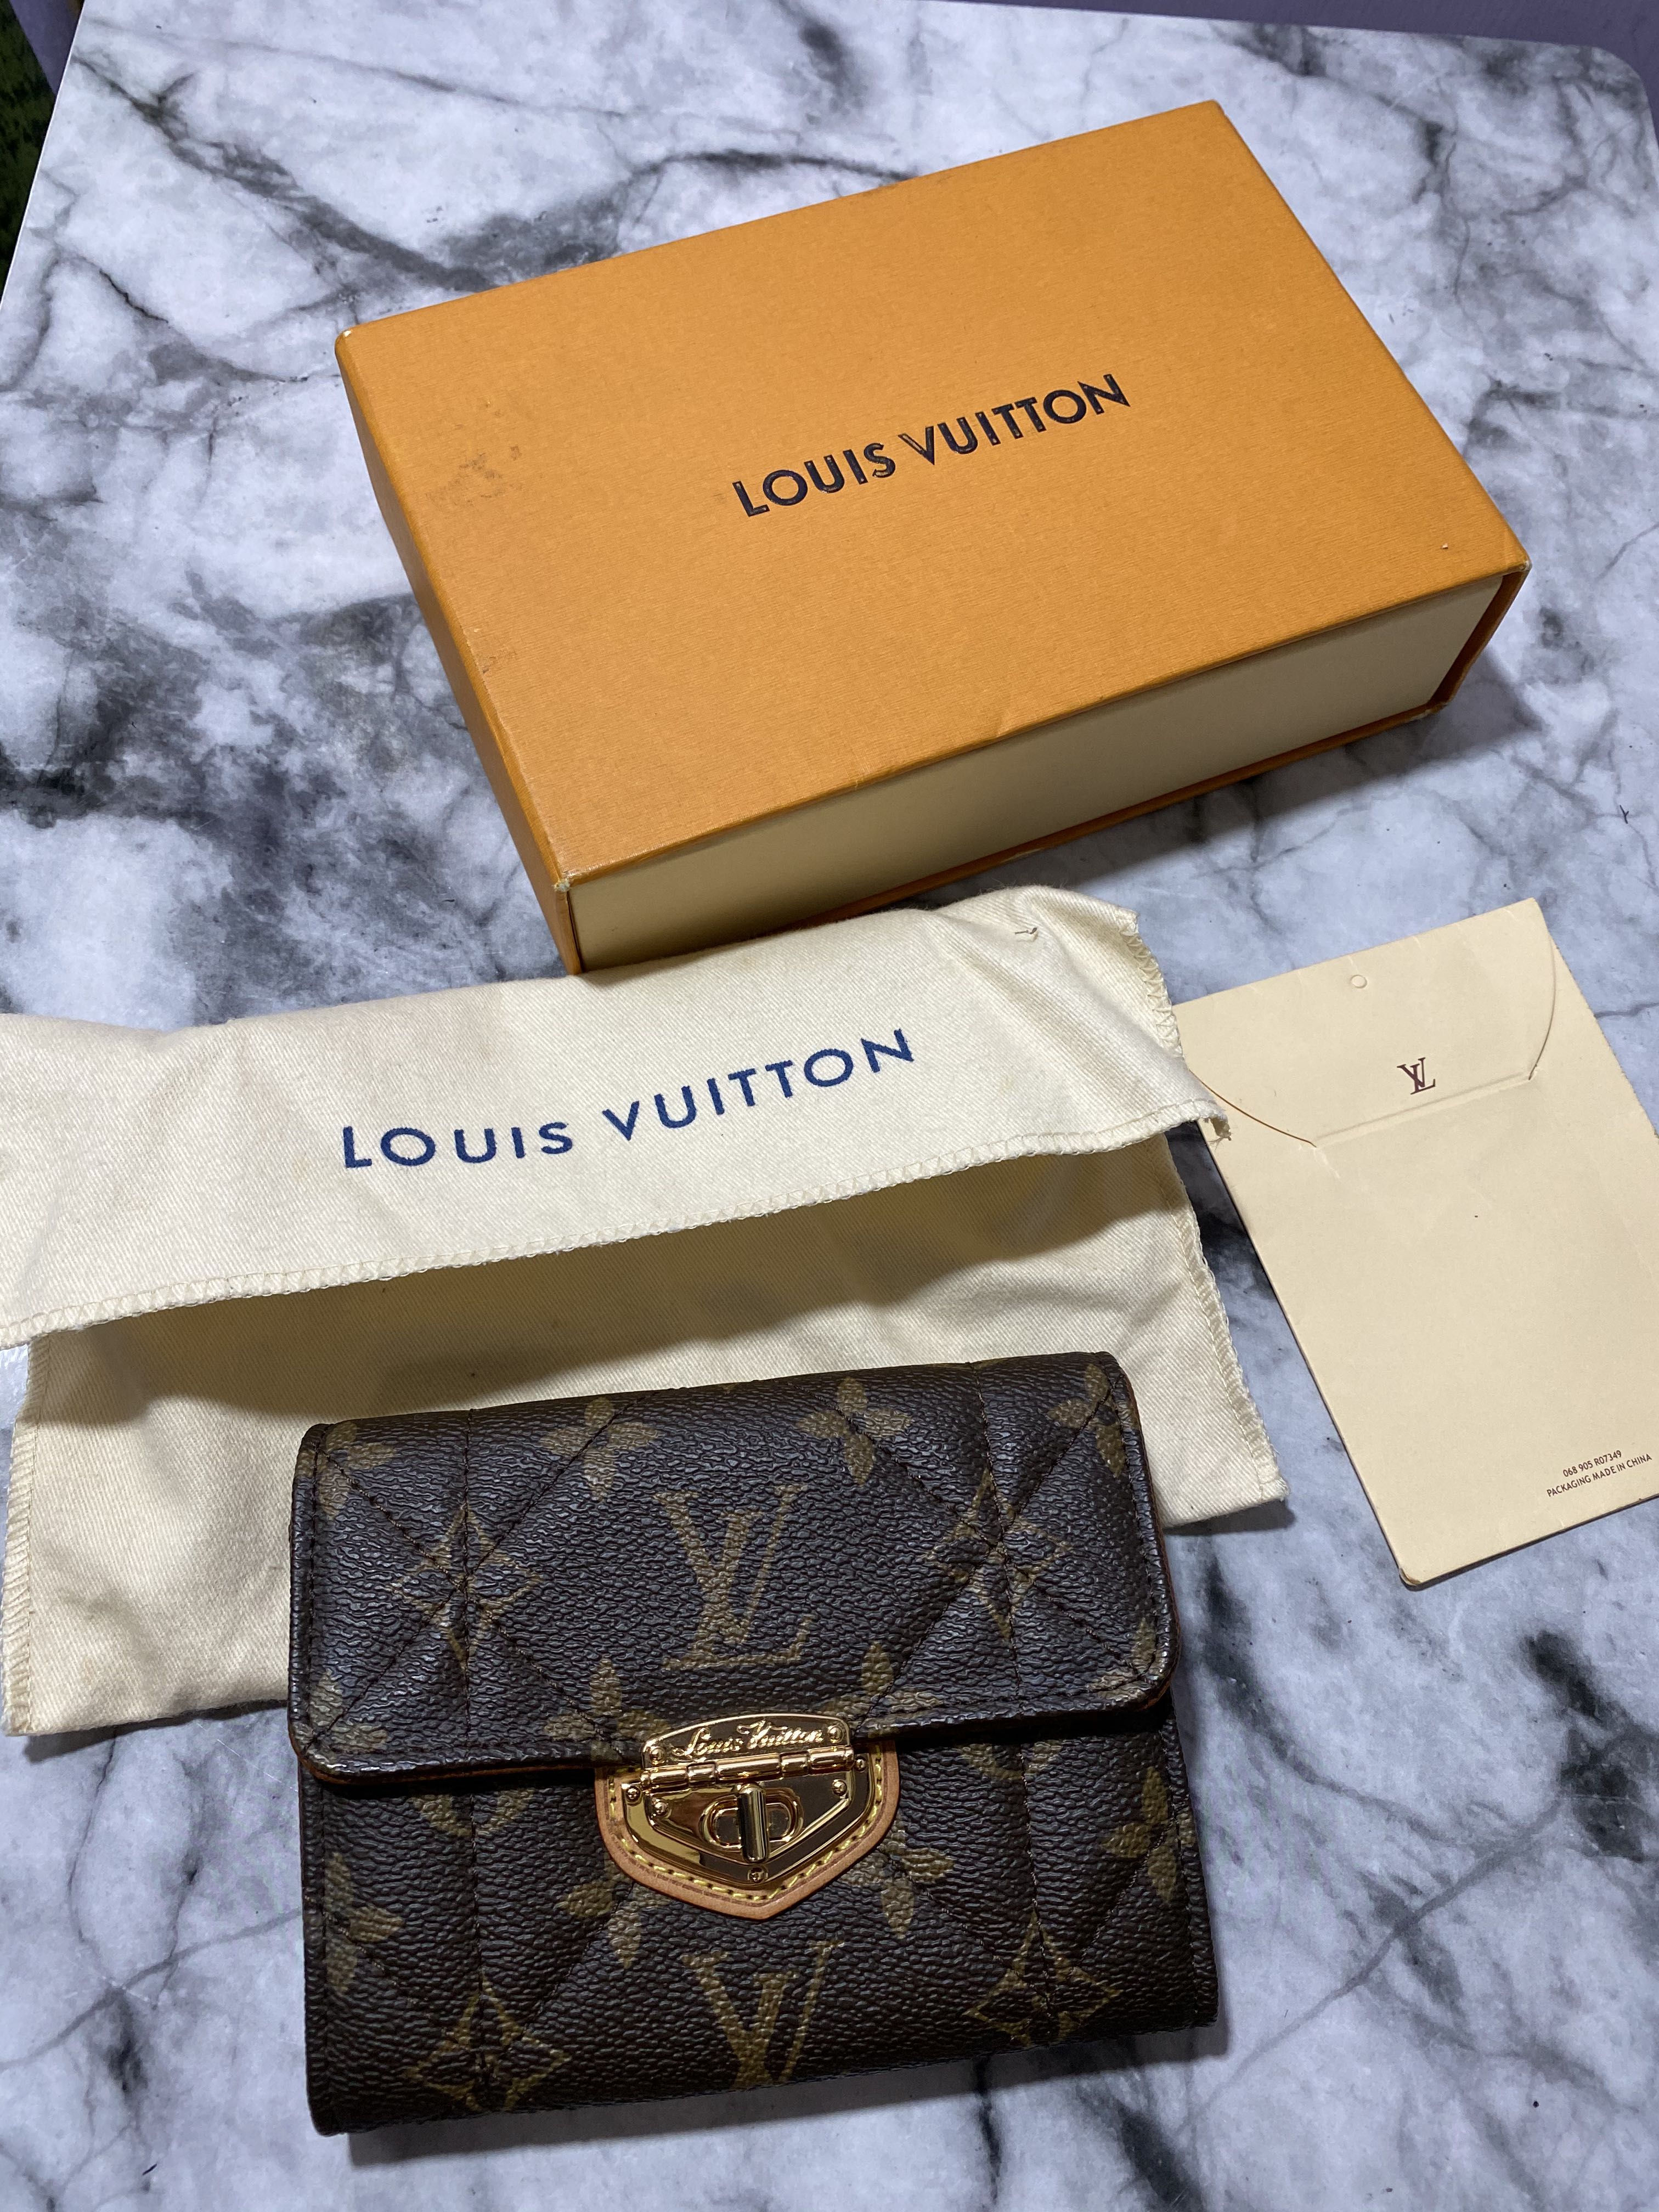 Louis Vuitton Etoile Sarah Monogram Wallet